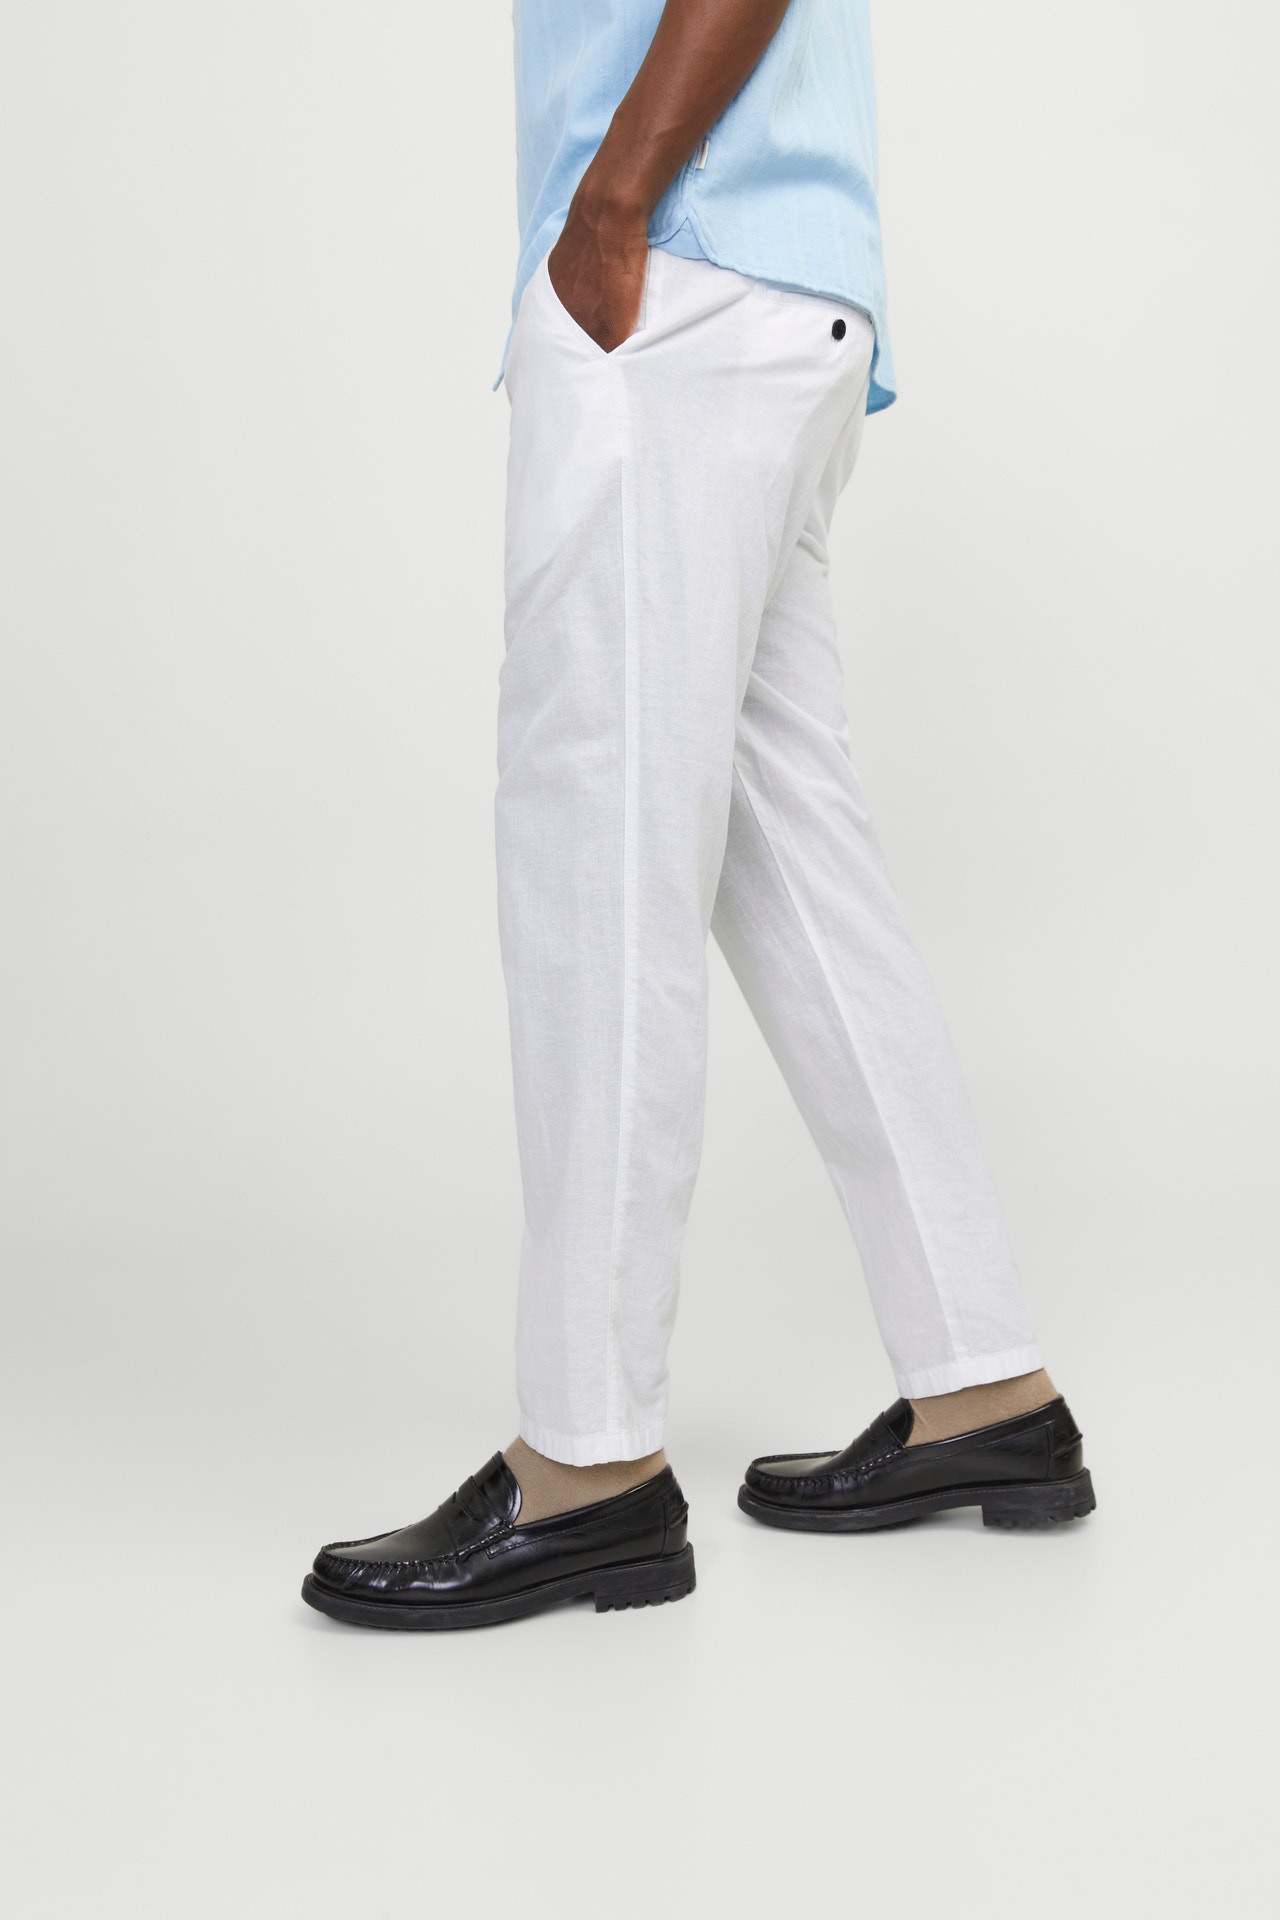 Jack & Jones Tapered Fit Spodnie chino -Bright White - 12248604